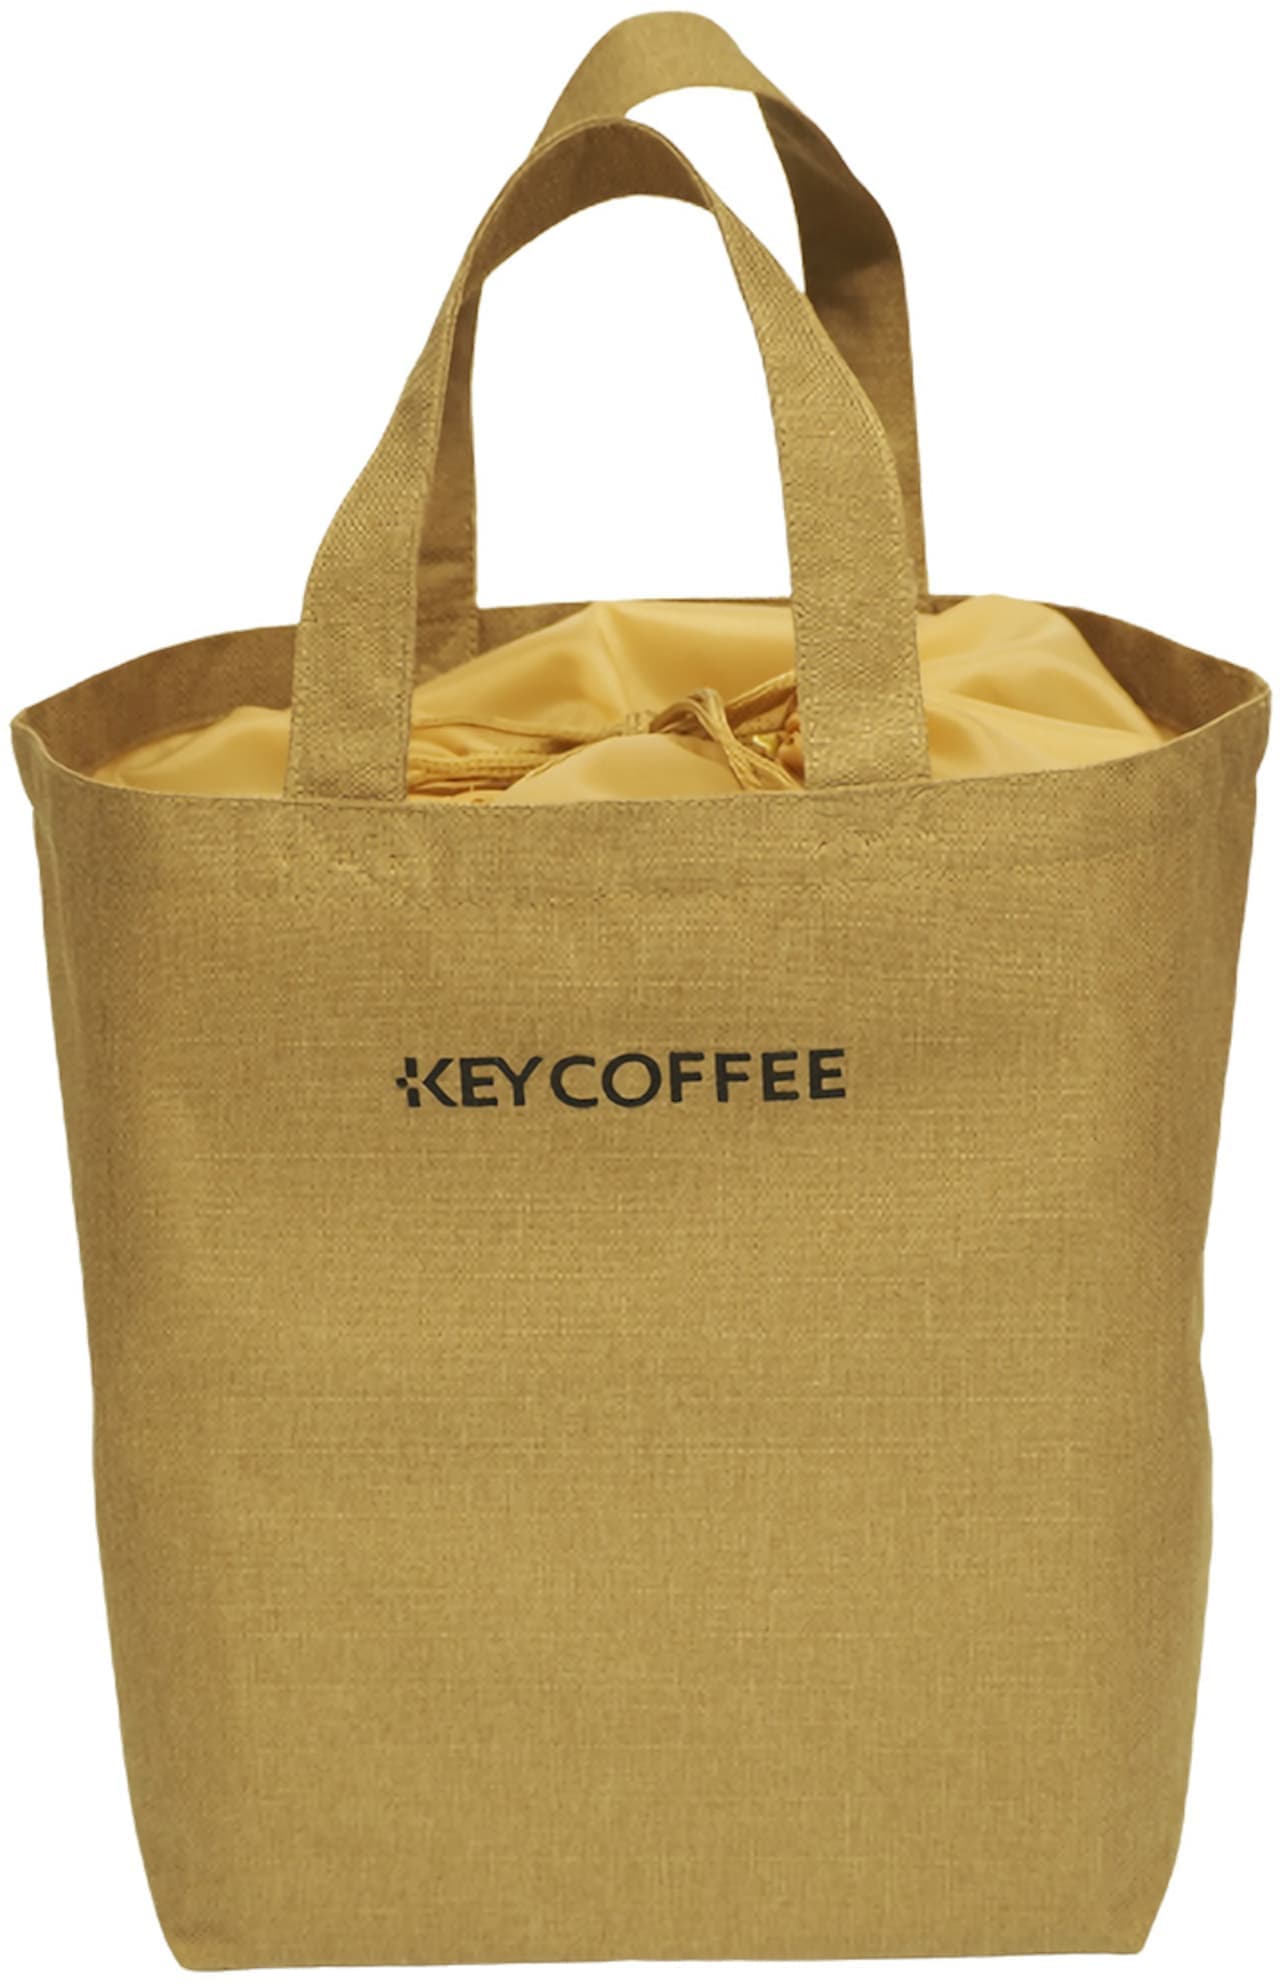 Key Coffee “2022 Coffee Bean Lucky Bag”